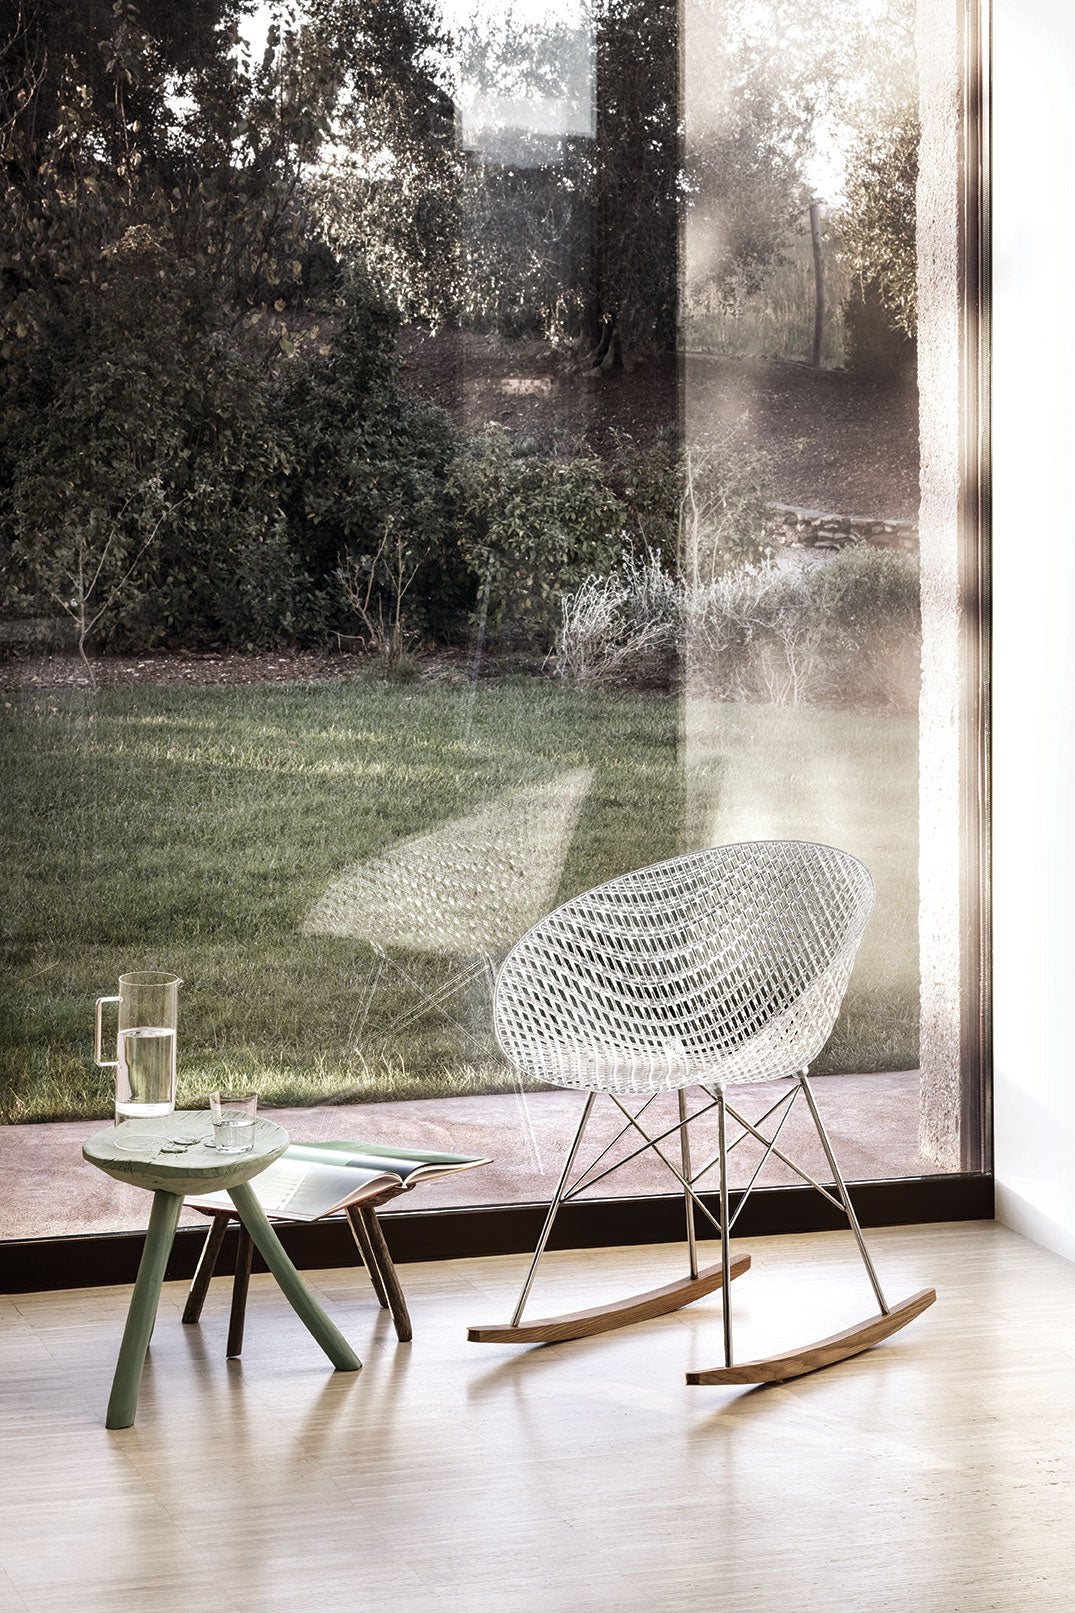 Kartell Smatrik Chair, Transparent/Chrome